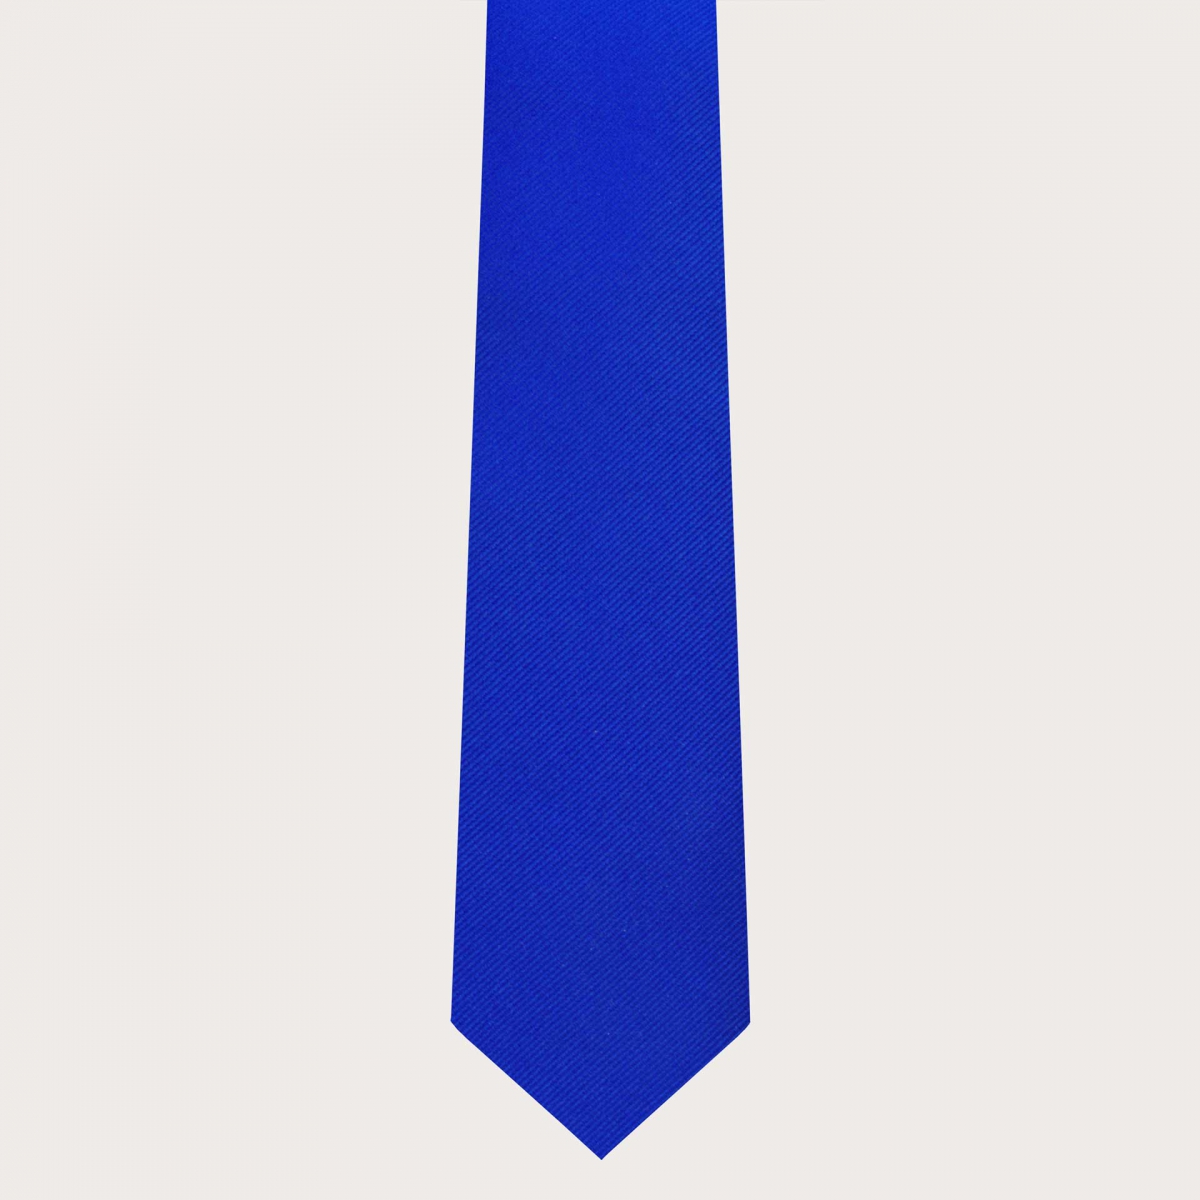 BRUCLE Exclusive royal blue silk necktie